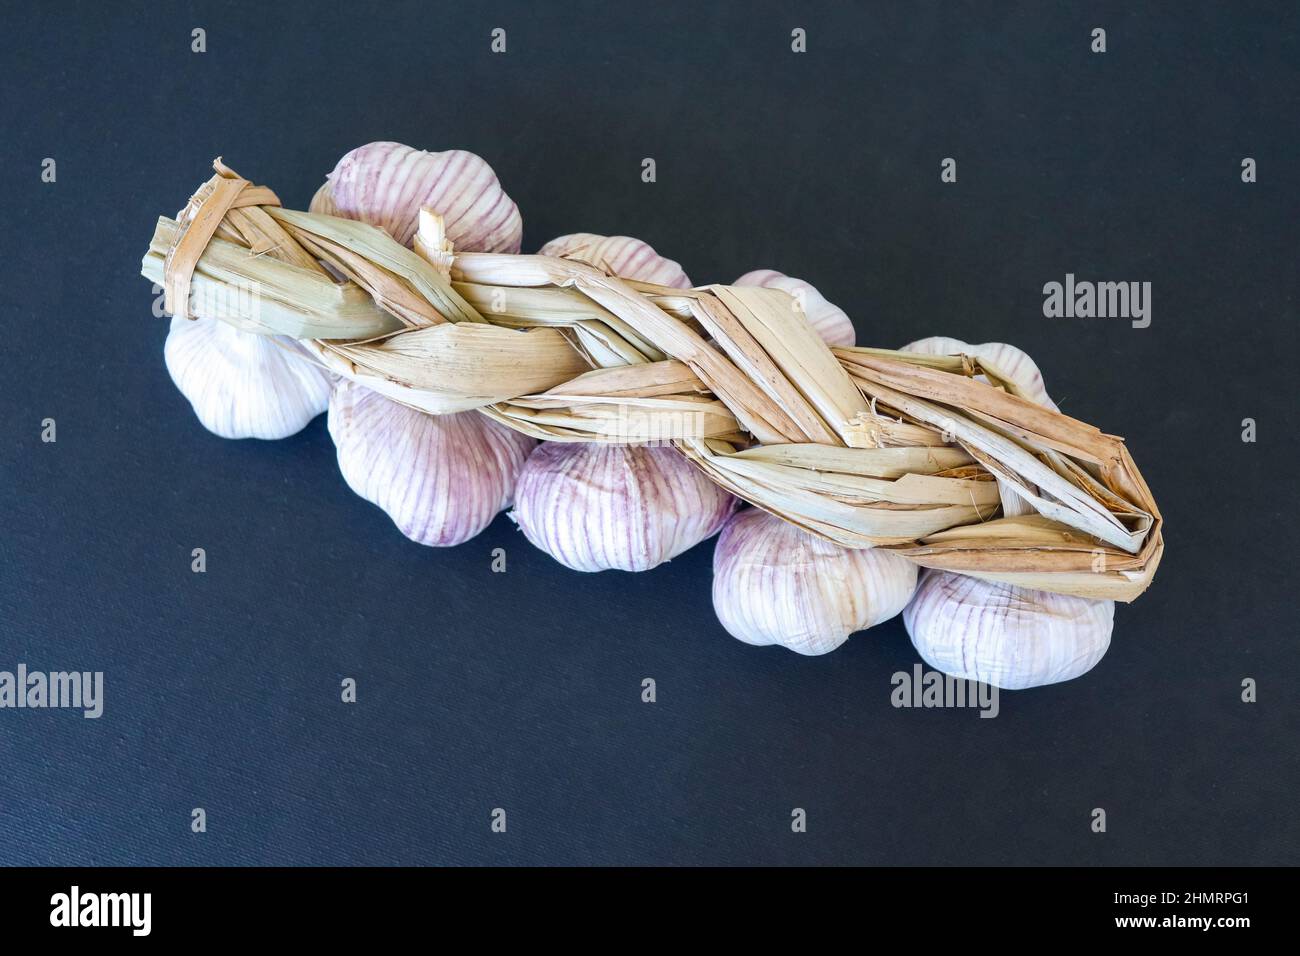 Garlic braid on black background Stock Photo